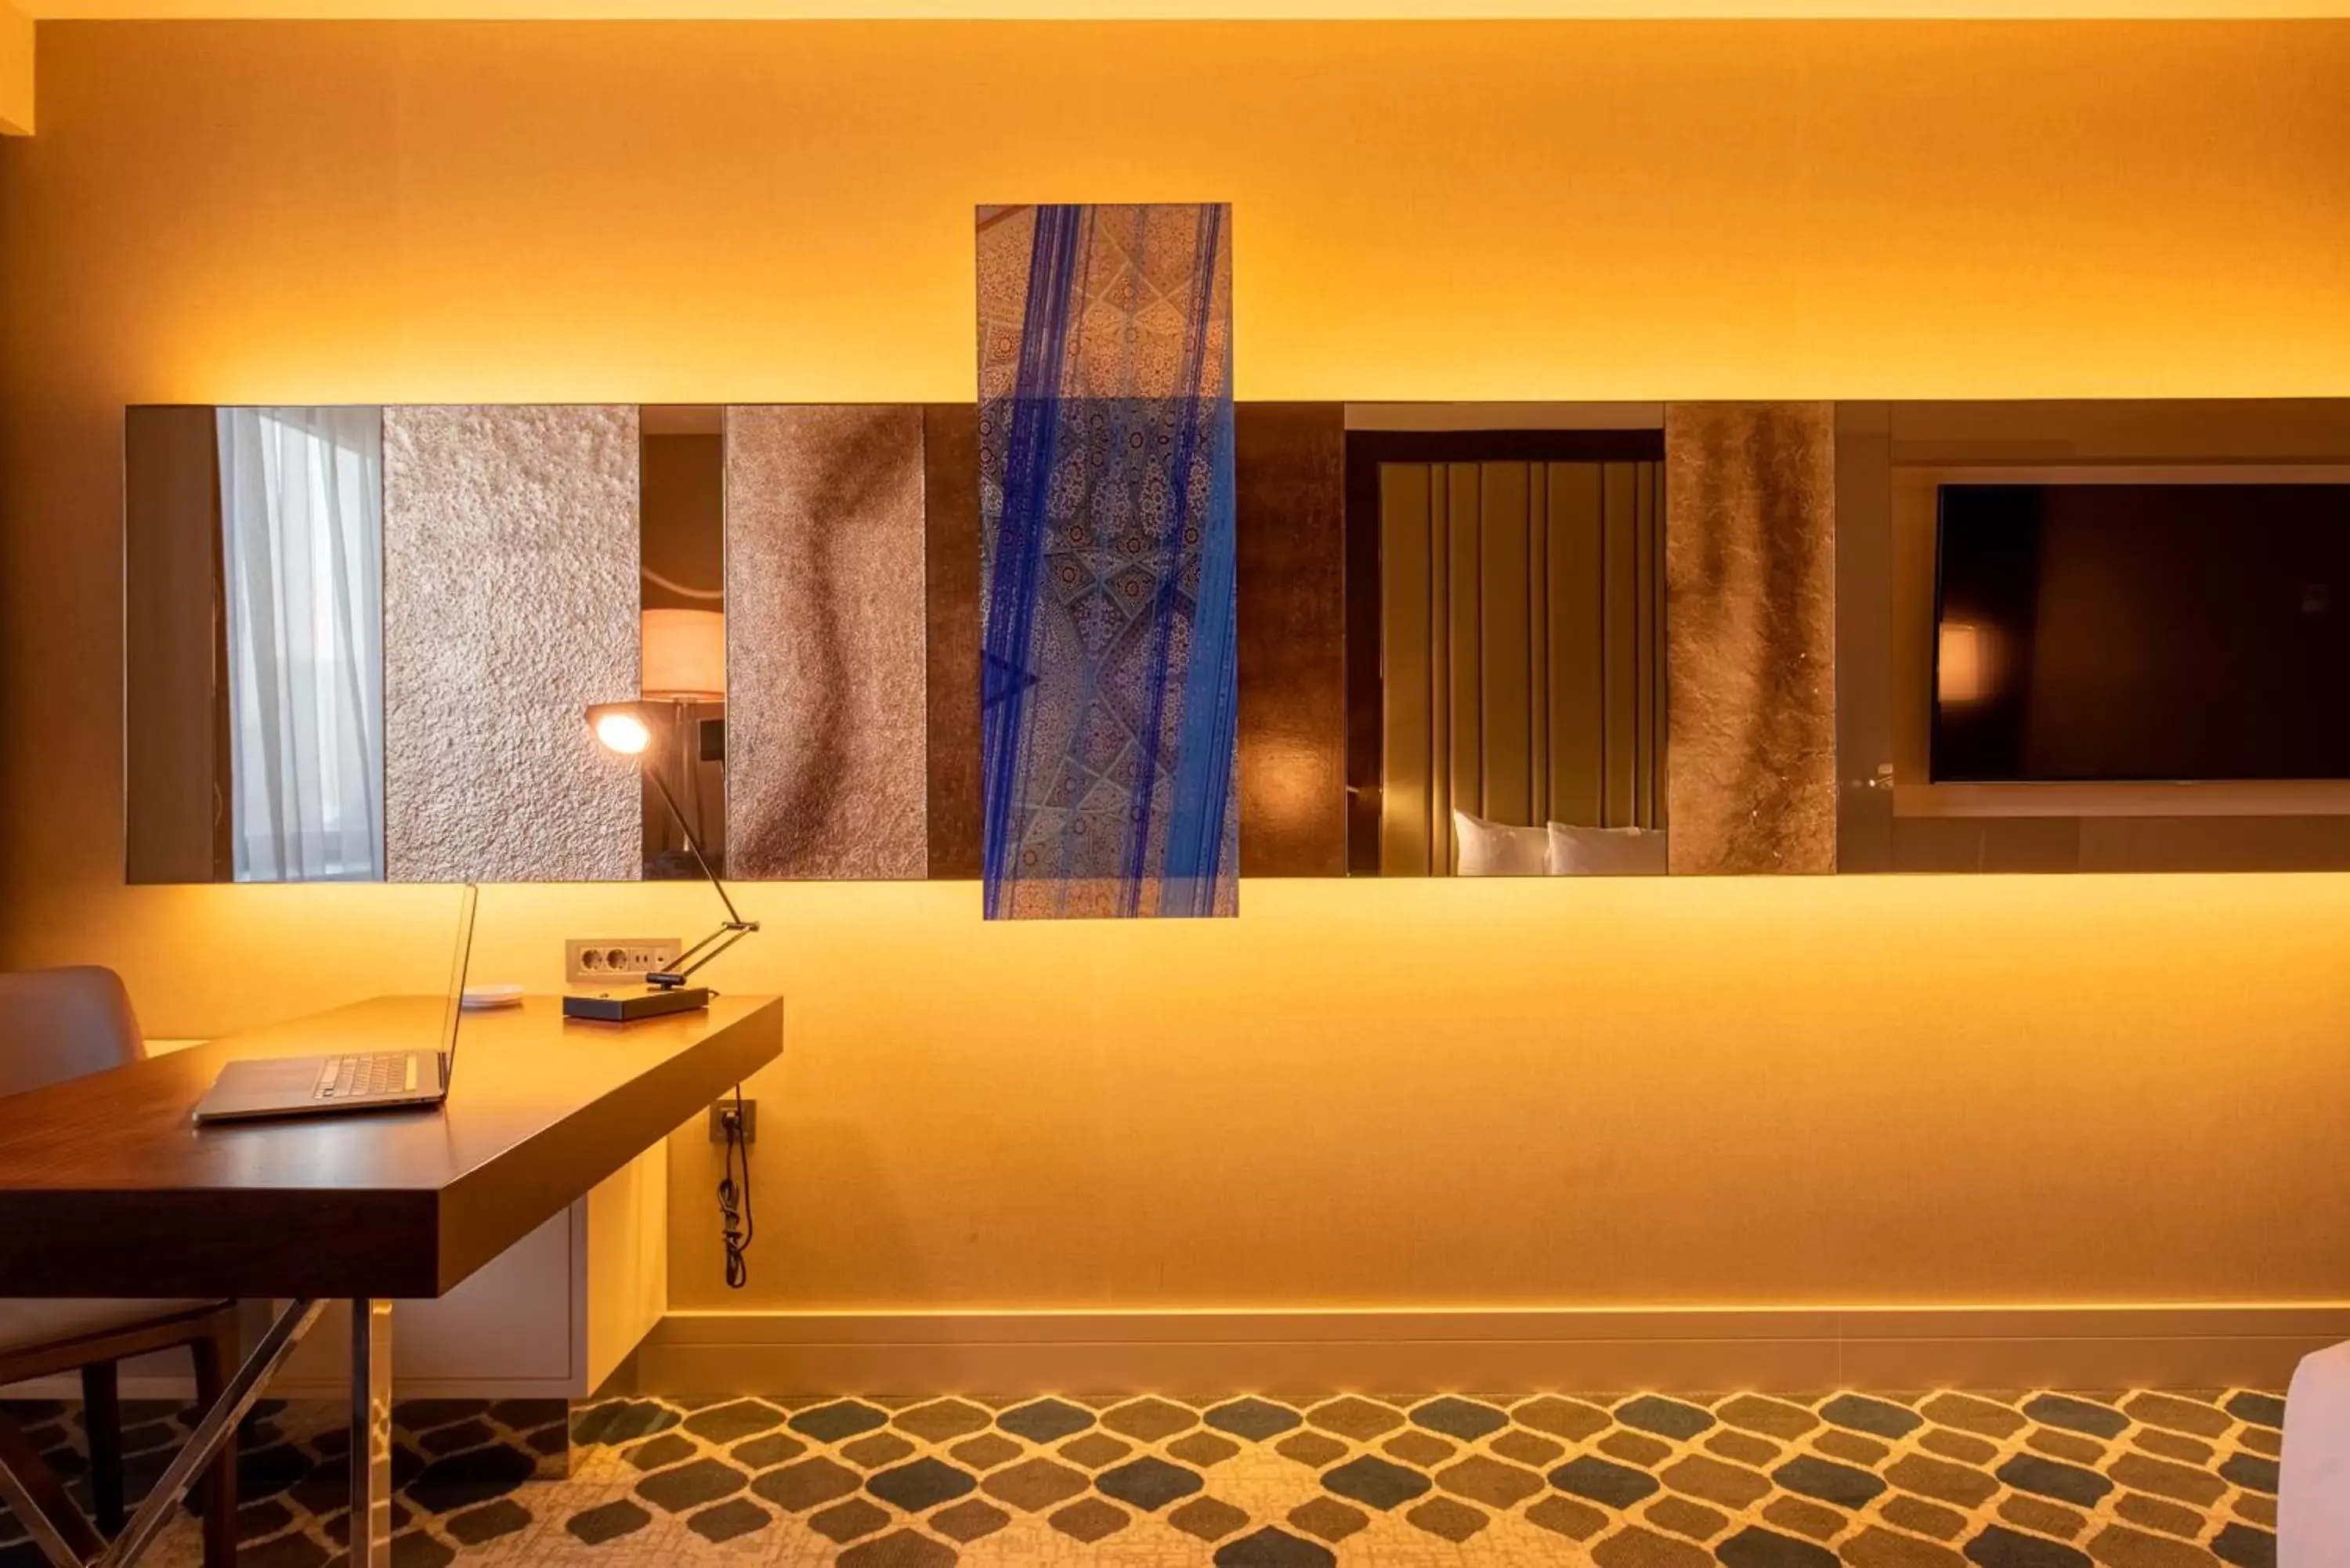 Photo of the whole room, Bathroom in International Hotel Tashkent